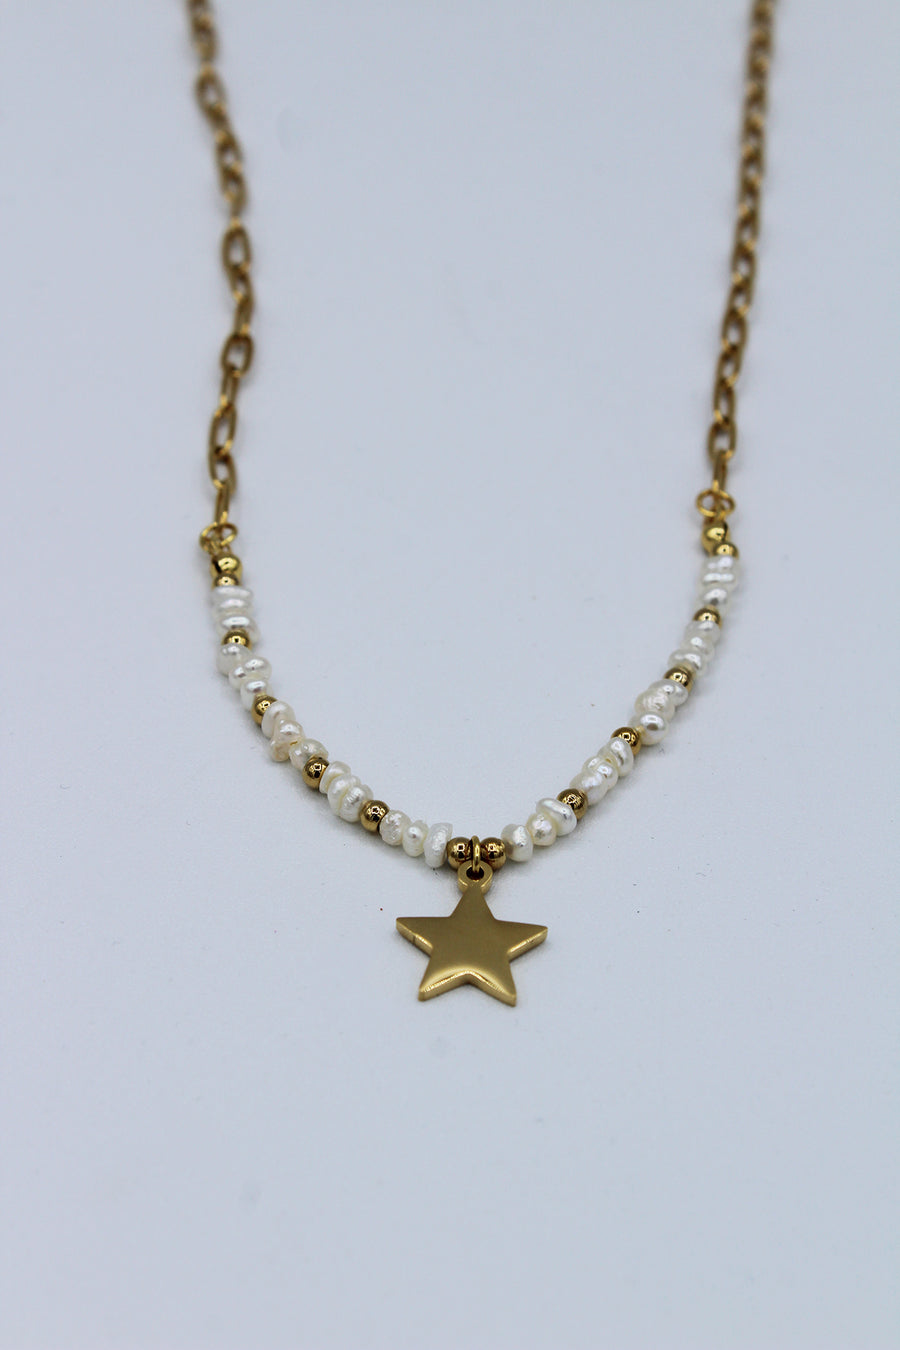 Bintang necklace